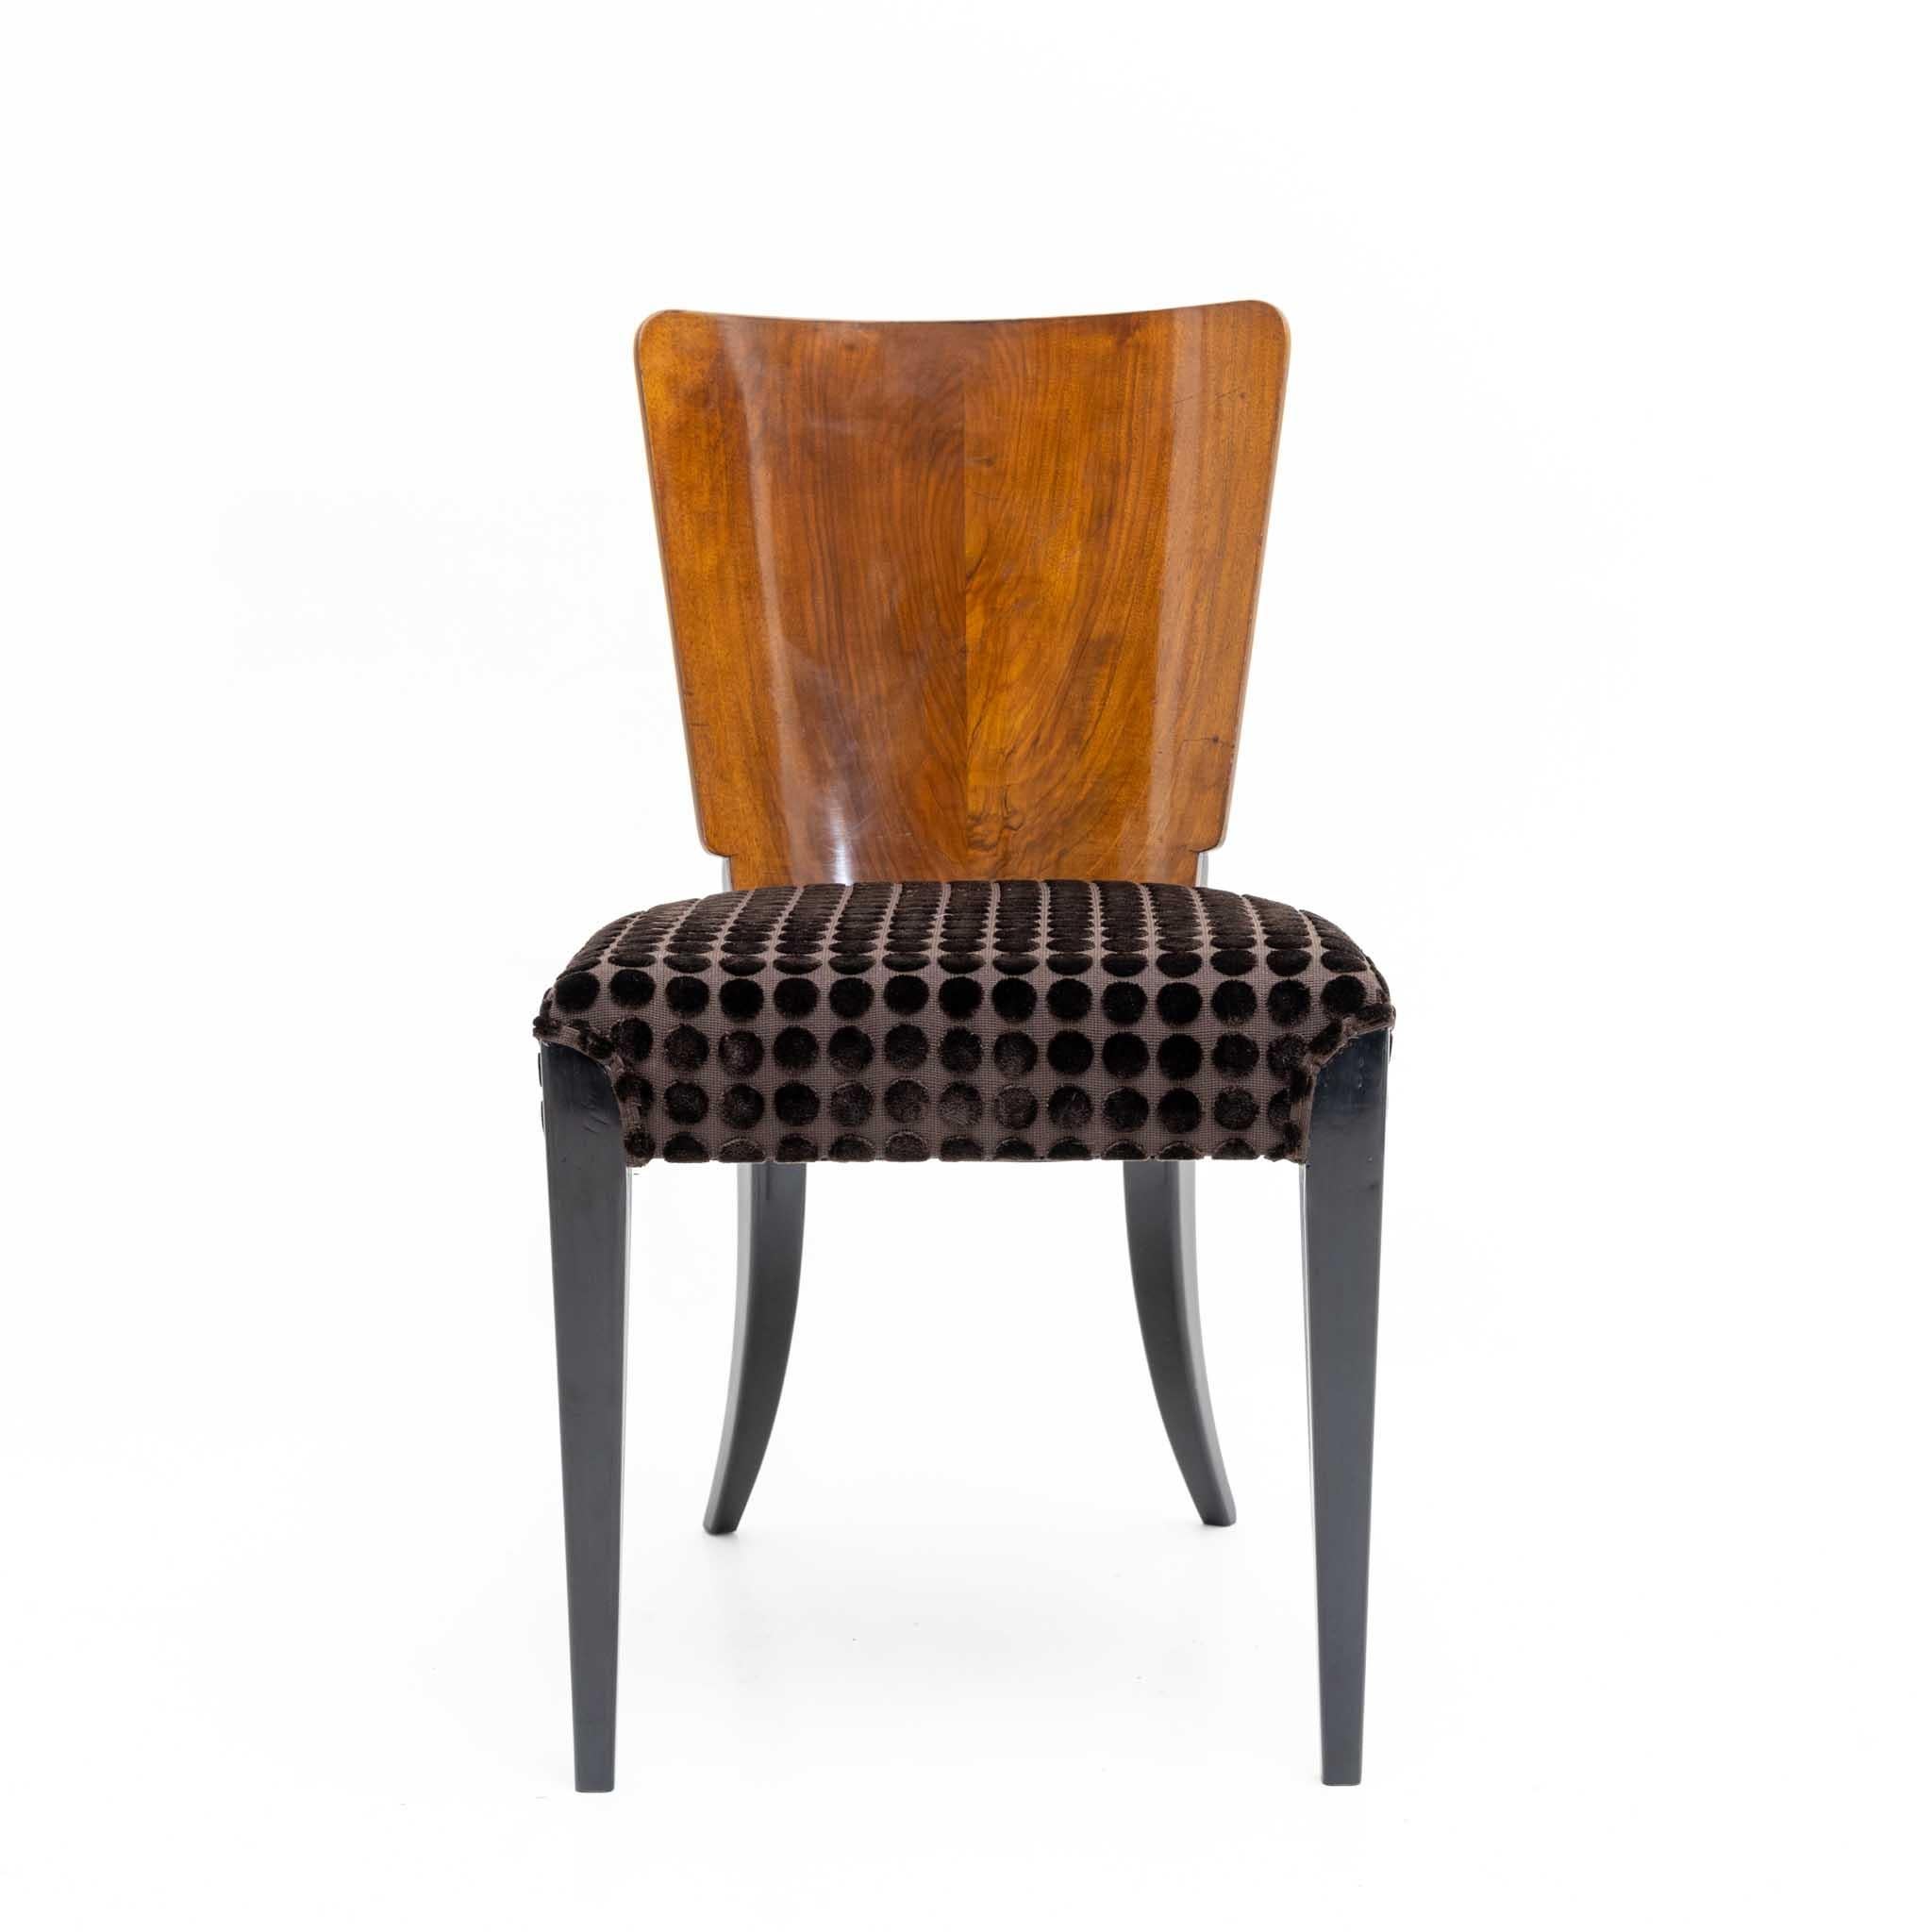 Jindrich Halabala Chairs, Czechoslovakia, 1930s For Sale 1